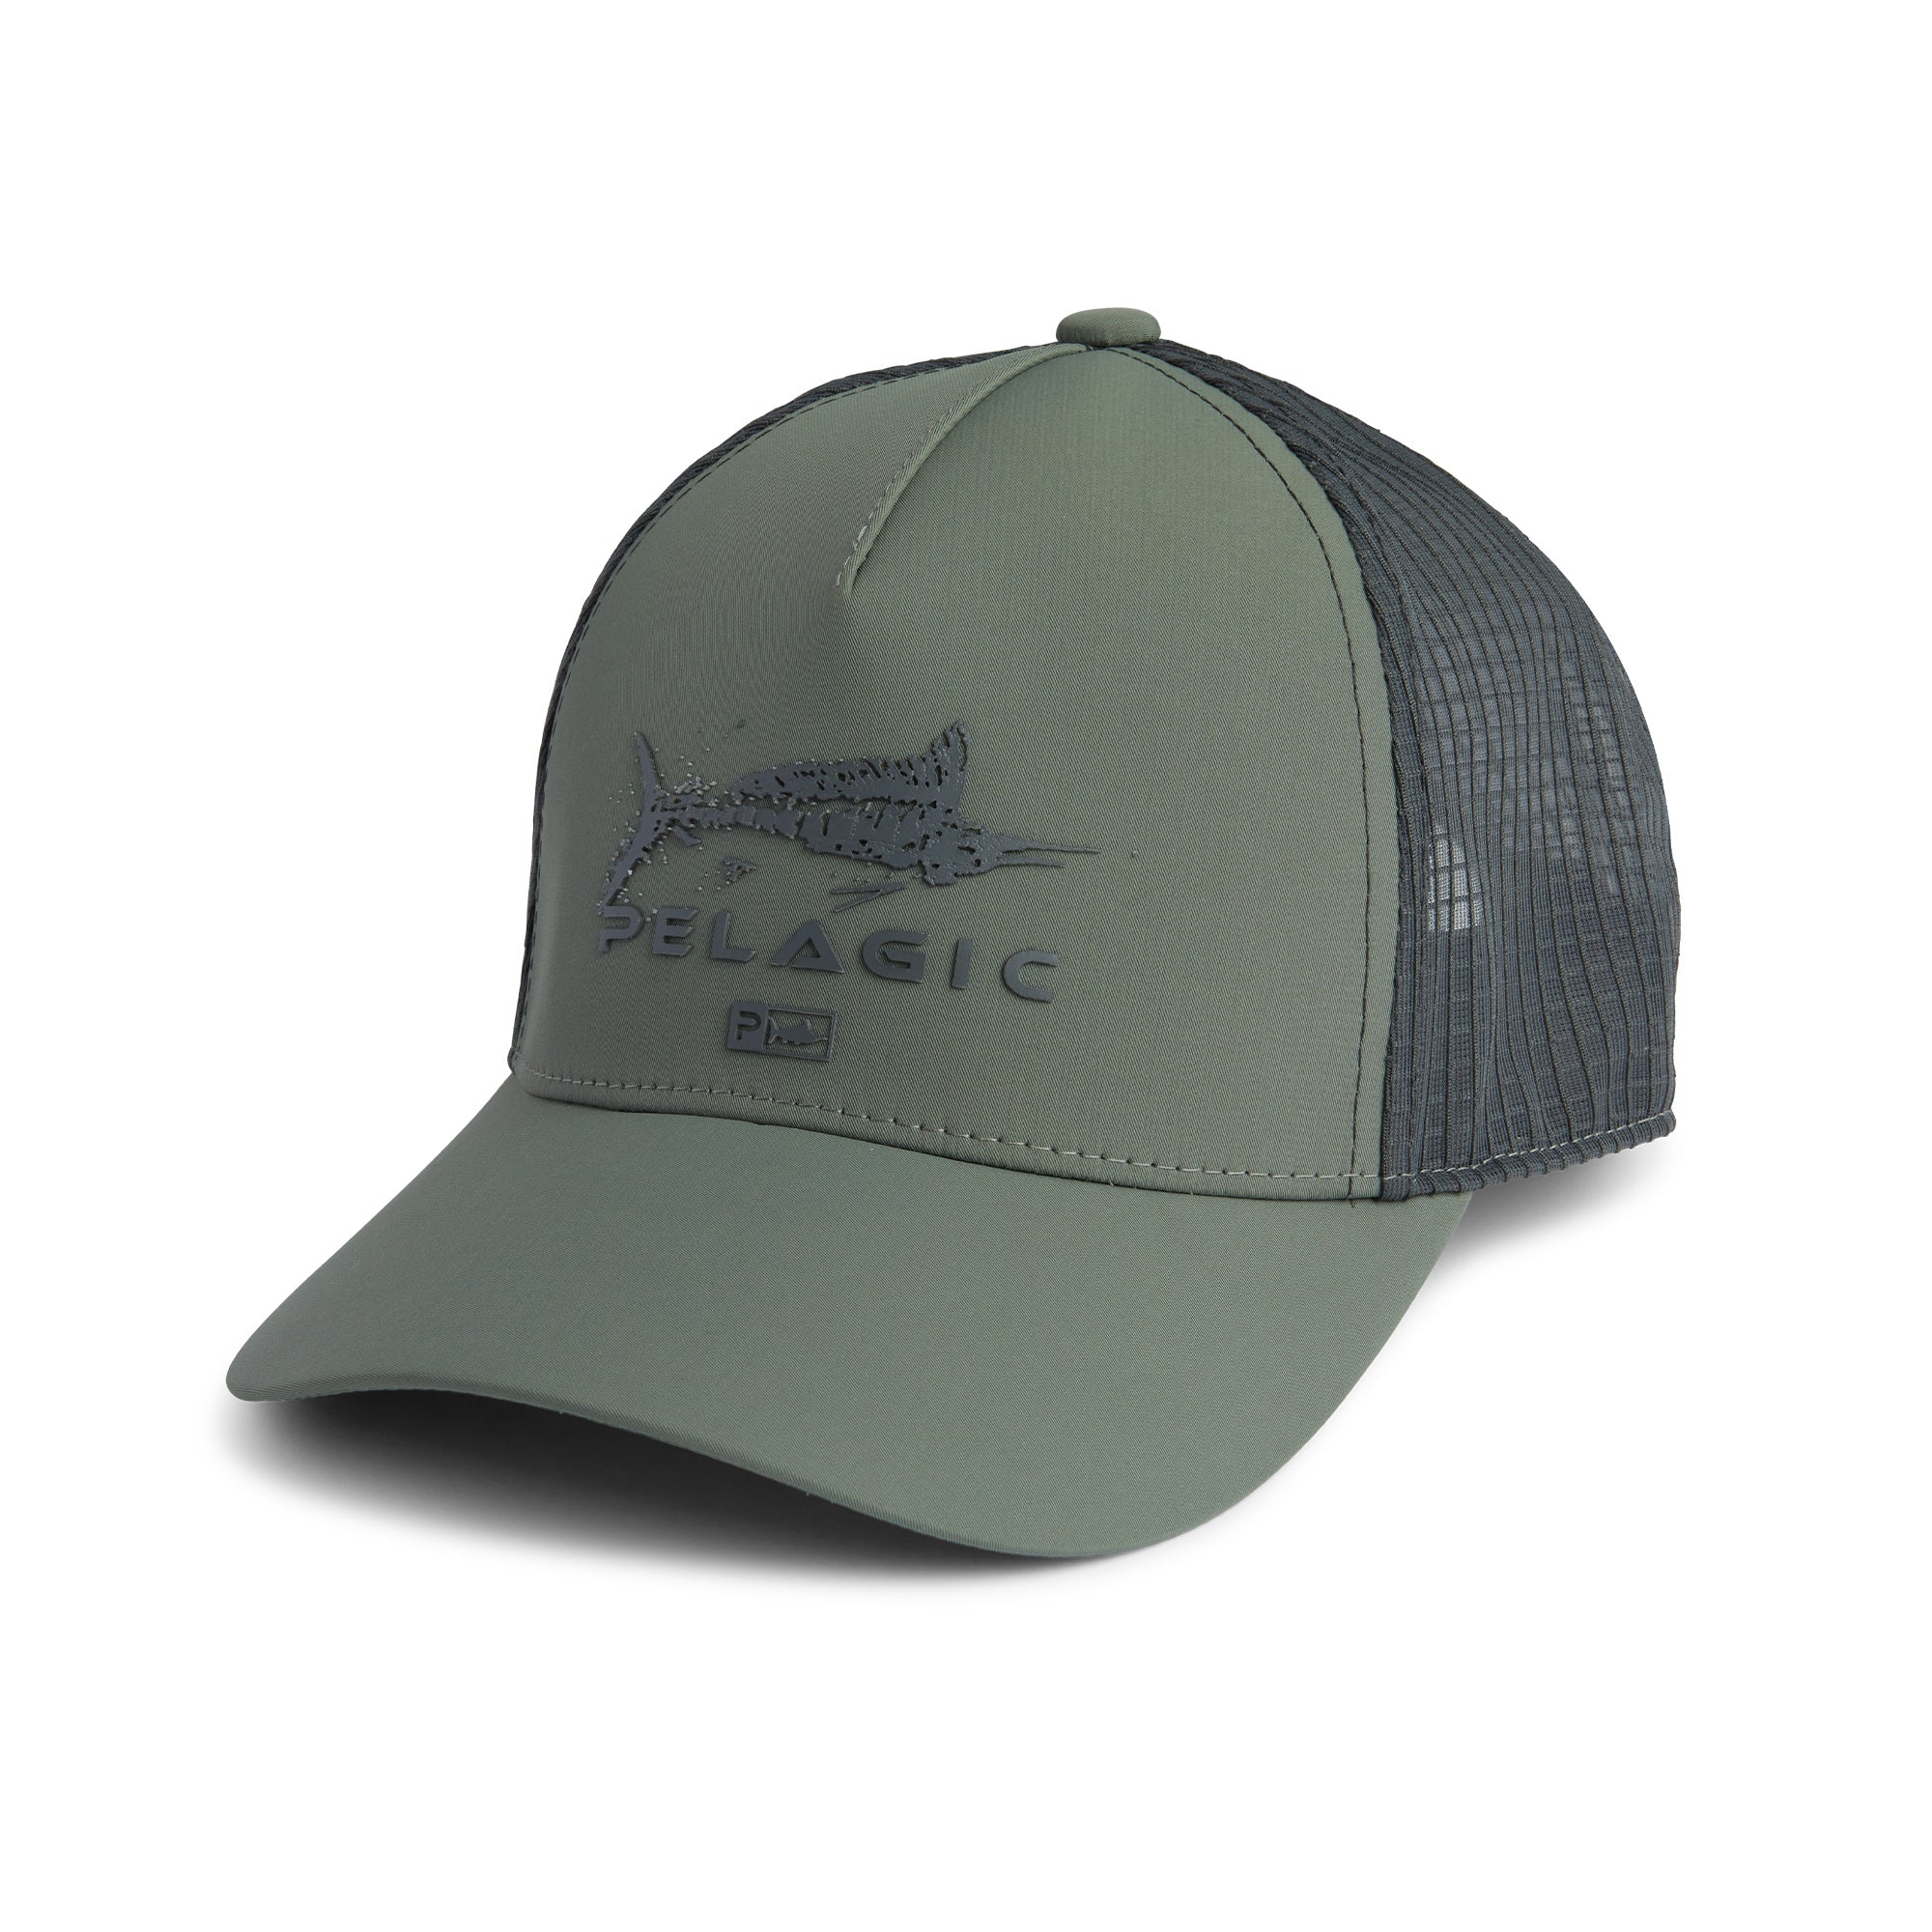 Pelagic Terminal Gyotaku Performance Trucker Cap / Hat, Black